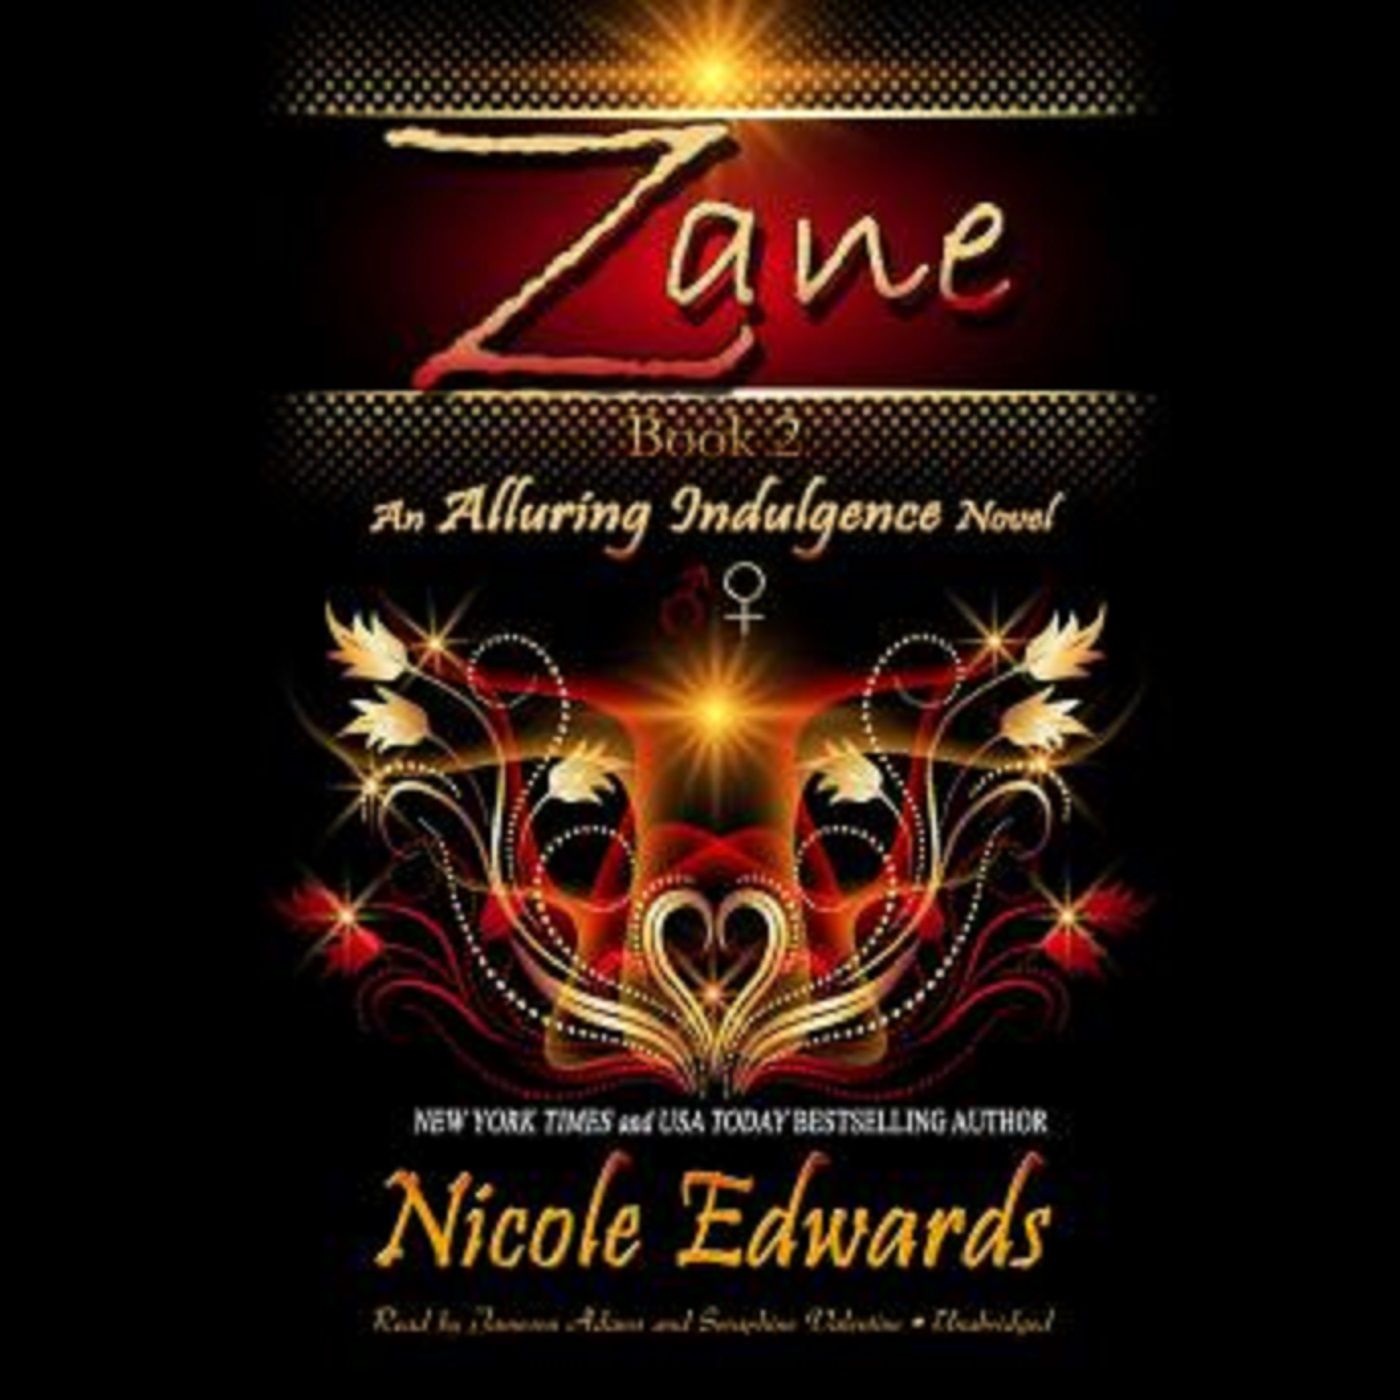 Zane by Nicole Edwards Part 2